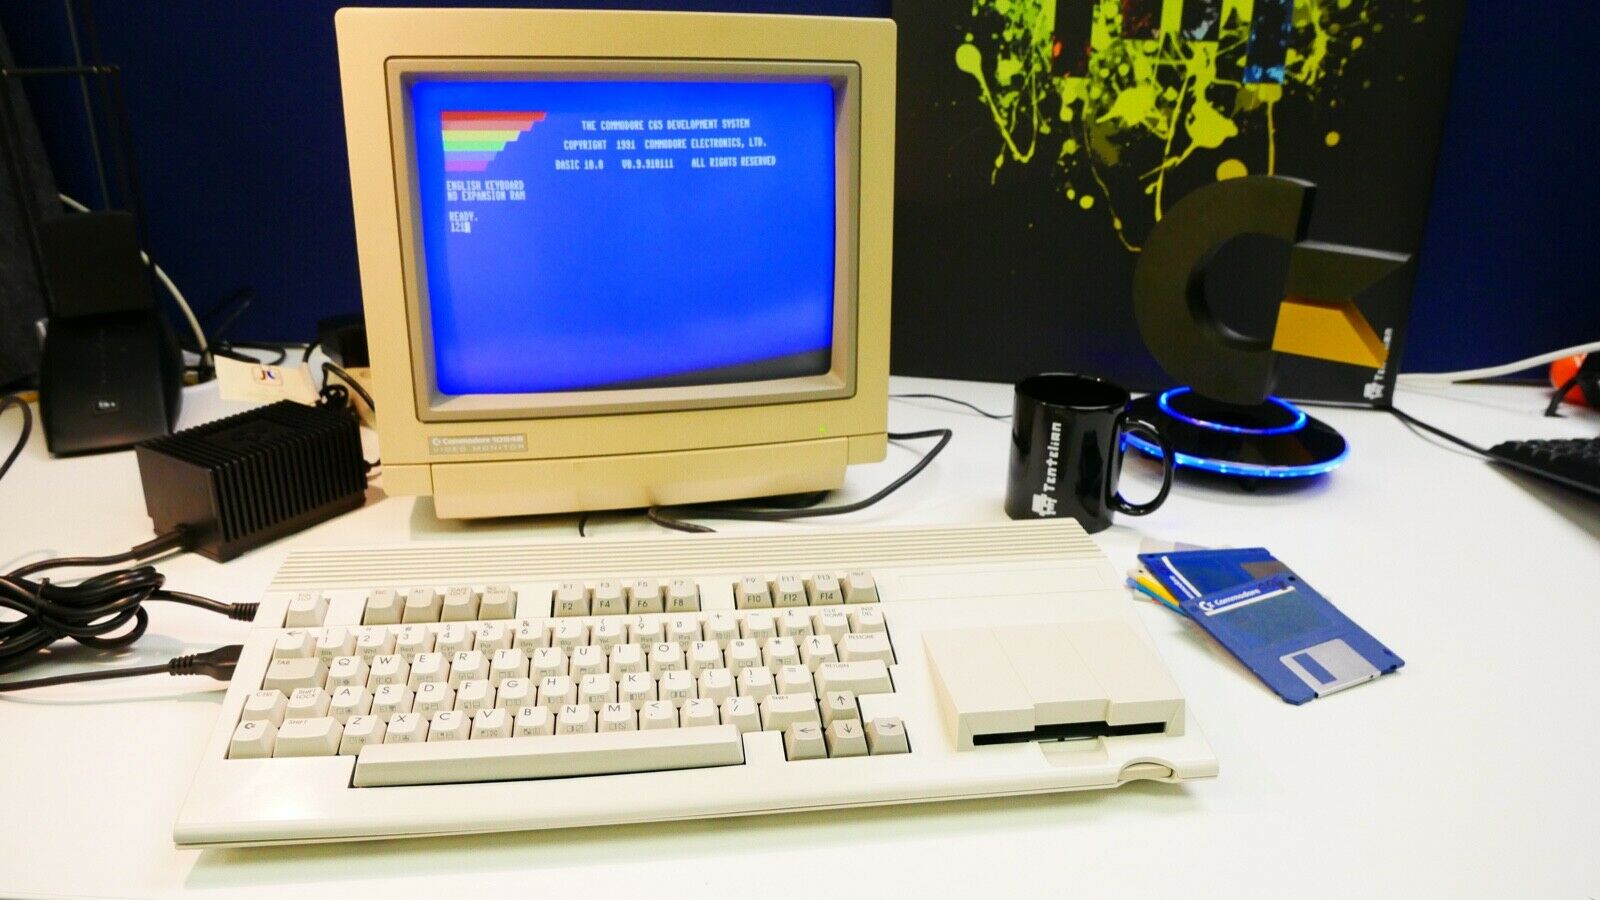 Крайне редкий прототип Commodore 65 выставили на eBay почти за $30 000